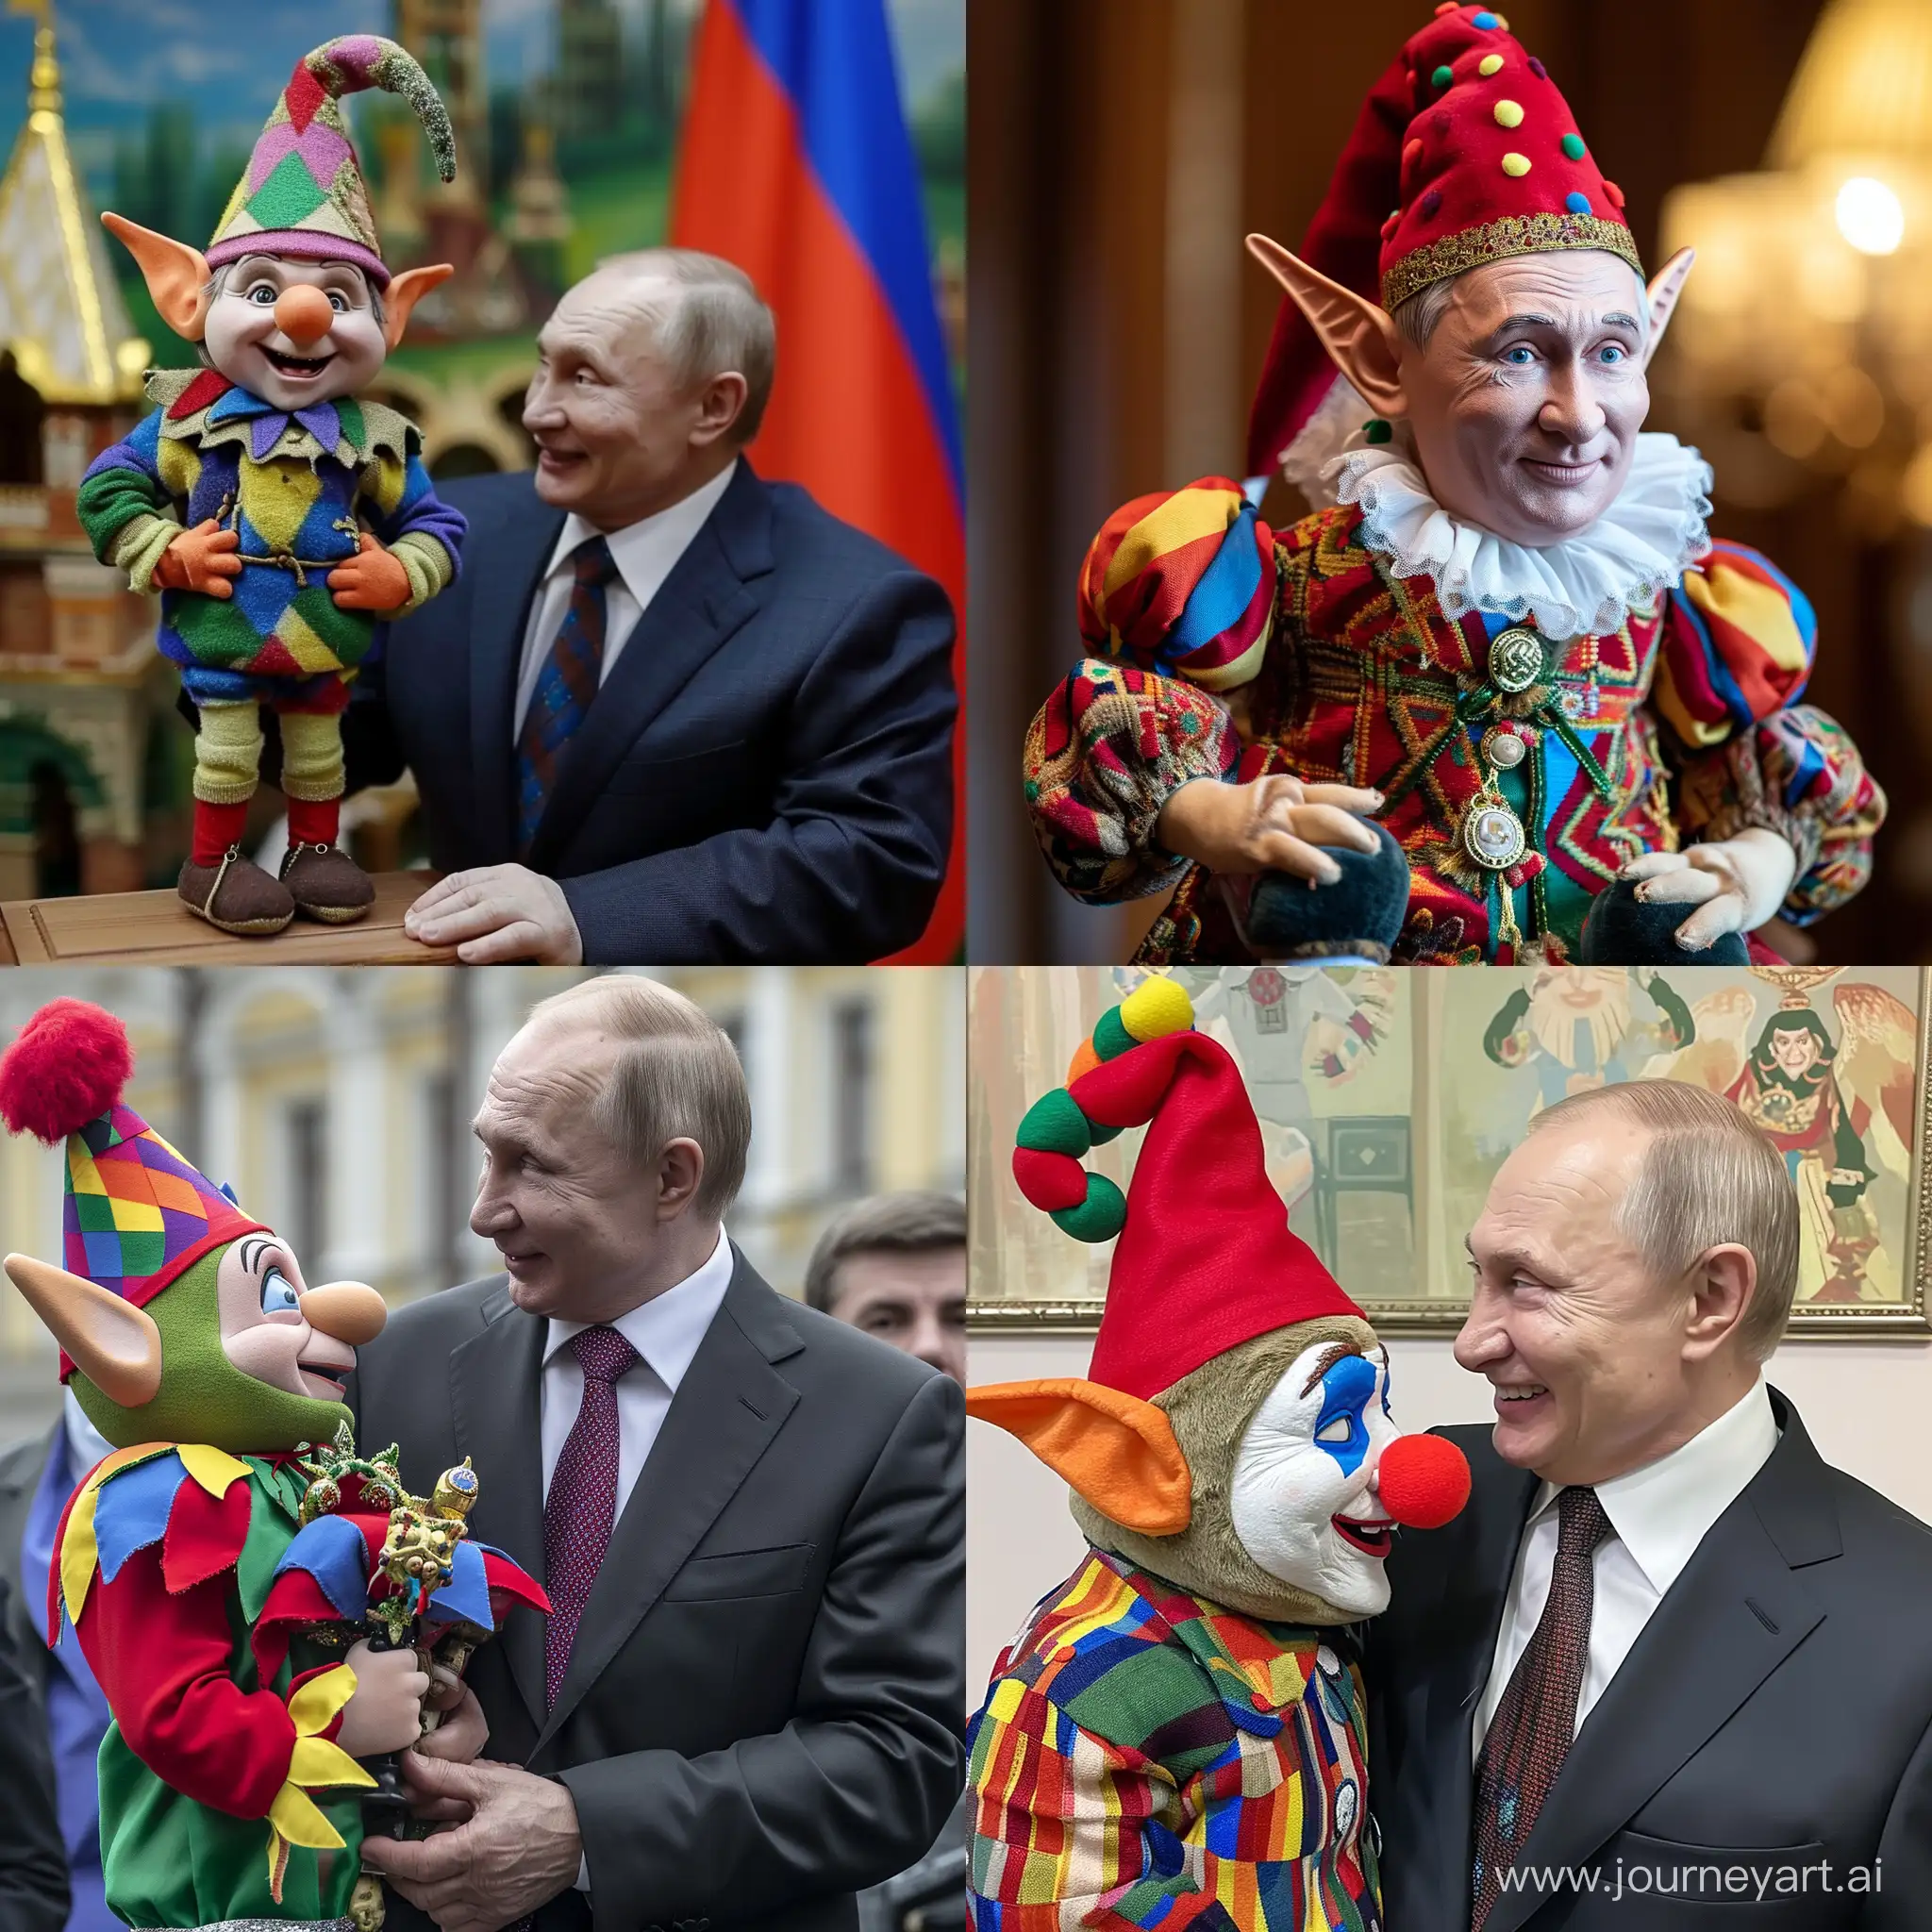 Gnome-Zelensky-Visits-Putin-in-Jesters-Hat